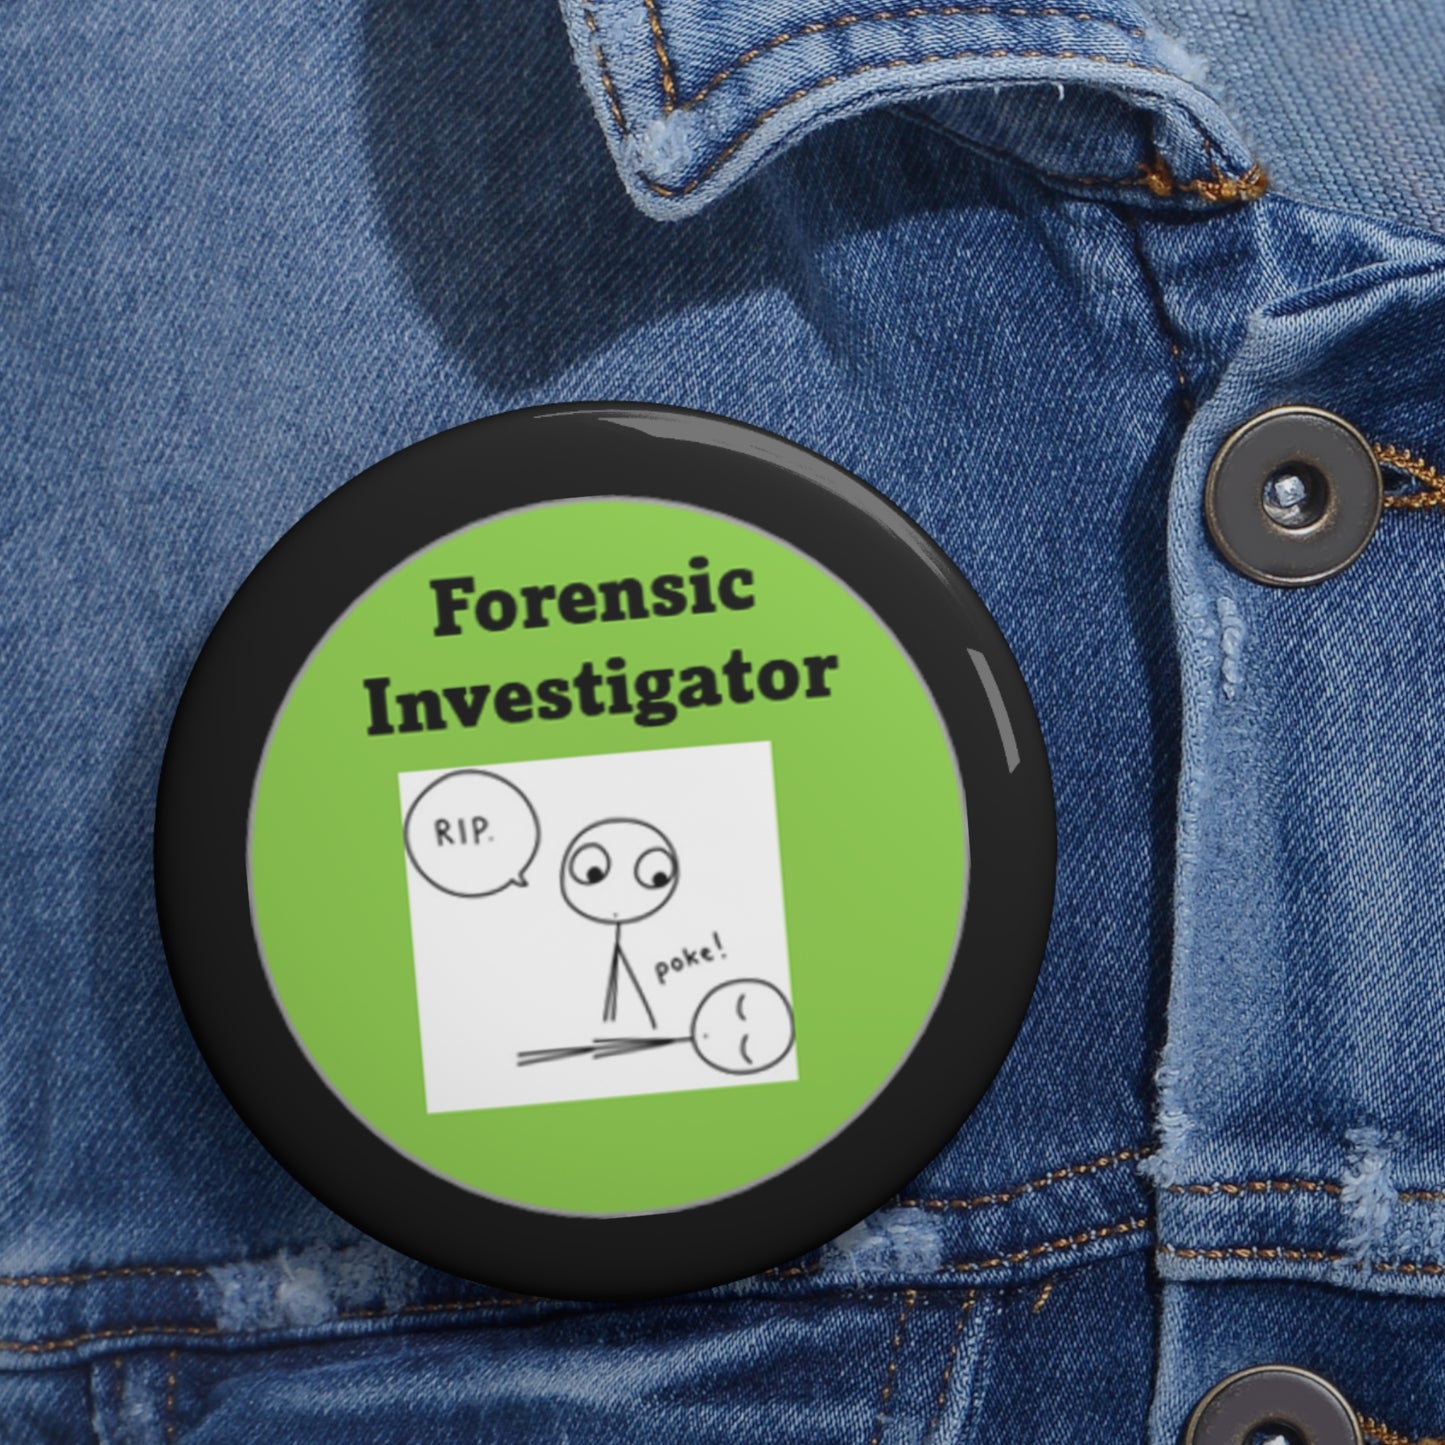 Forensic Investigator Poke - Green & Black - Custom Pin Buttons